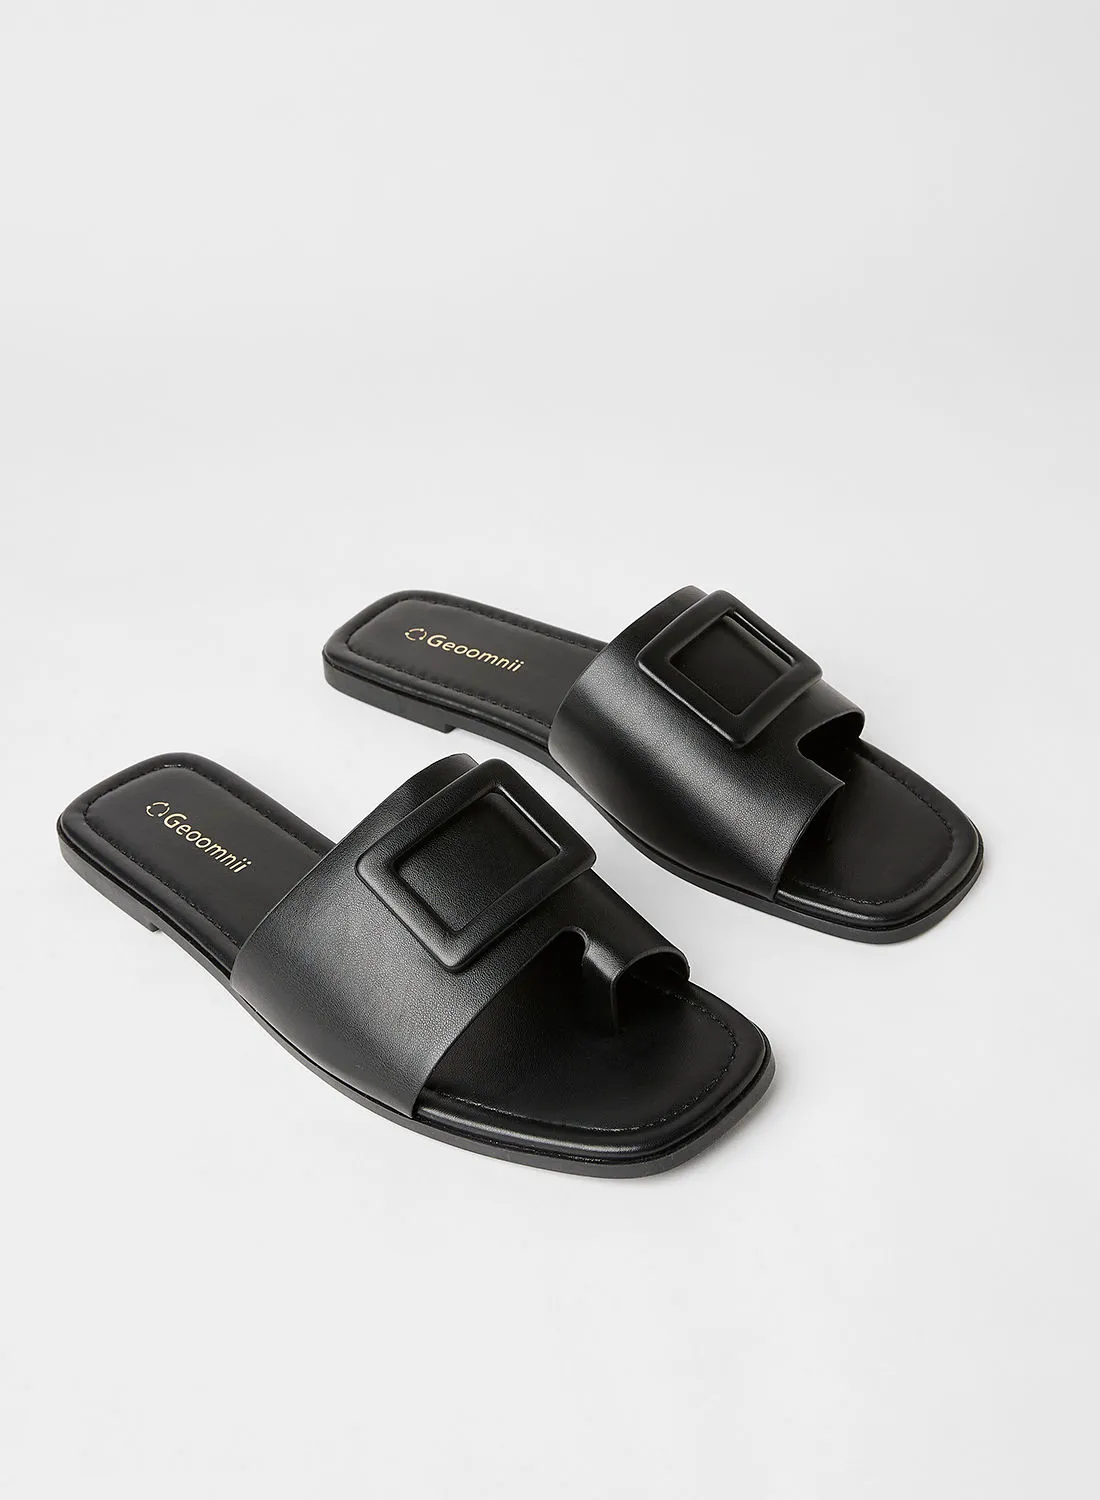 Geoomnii Casual Comfortable Flat Sandals Black